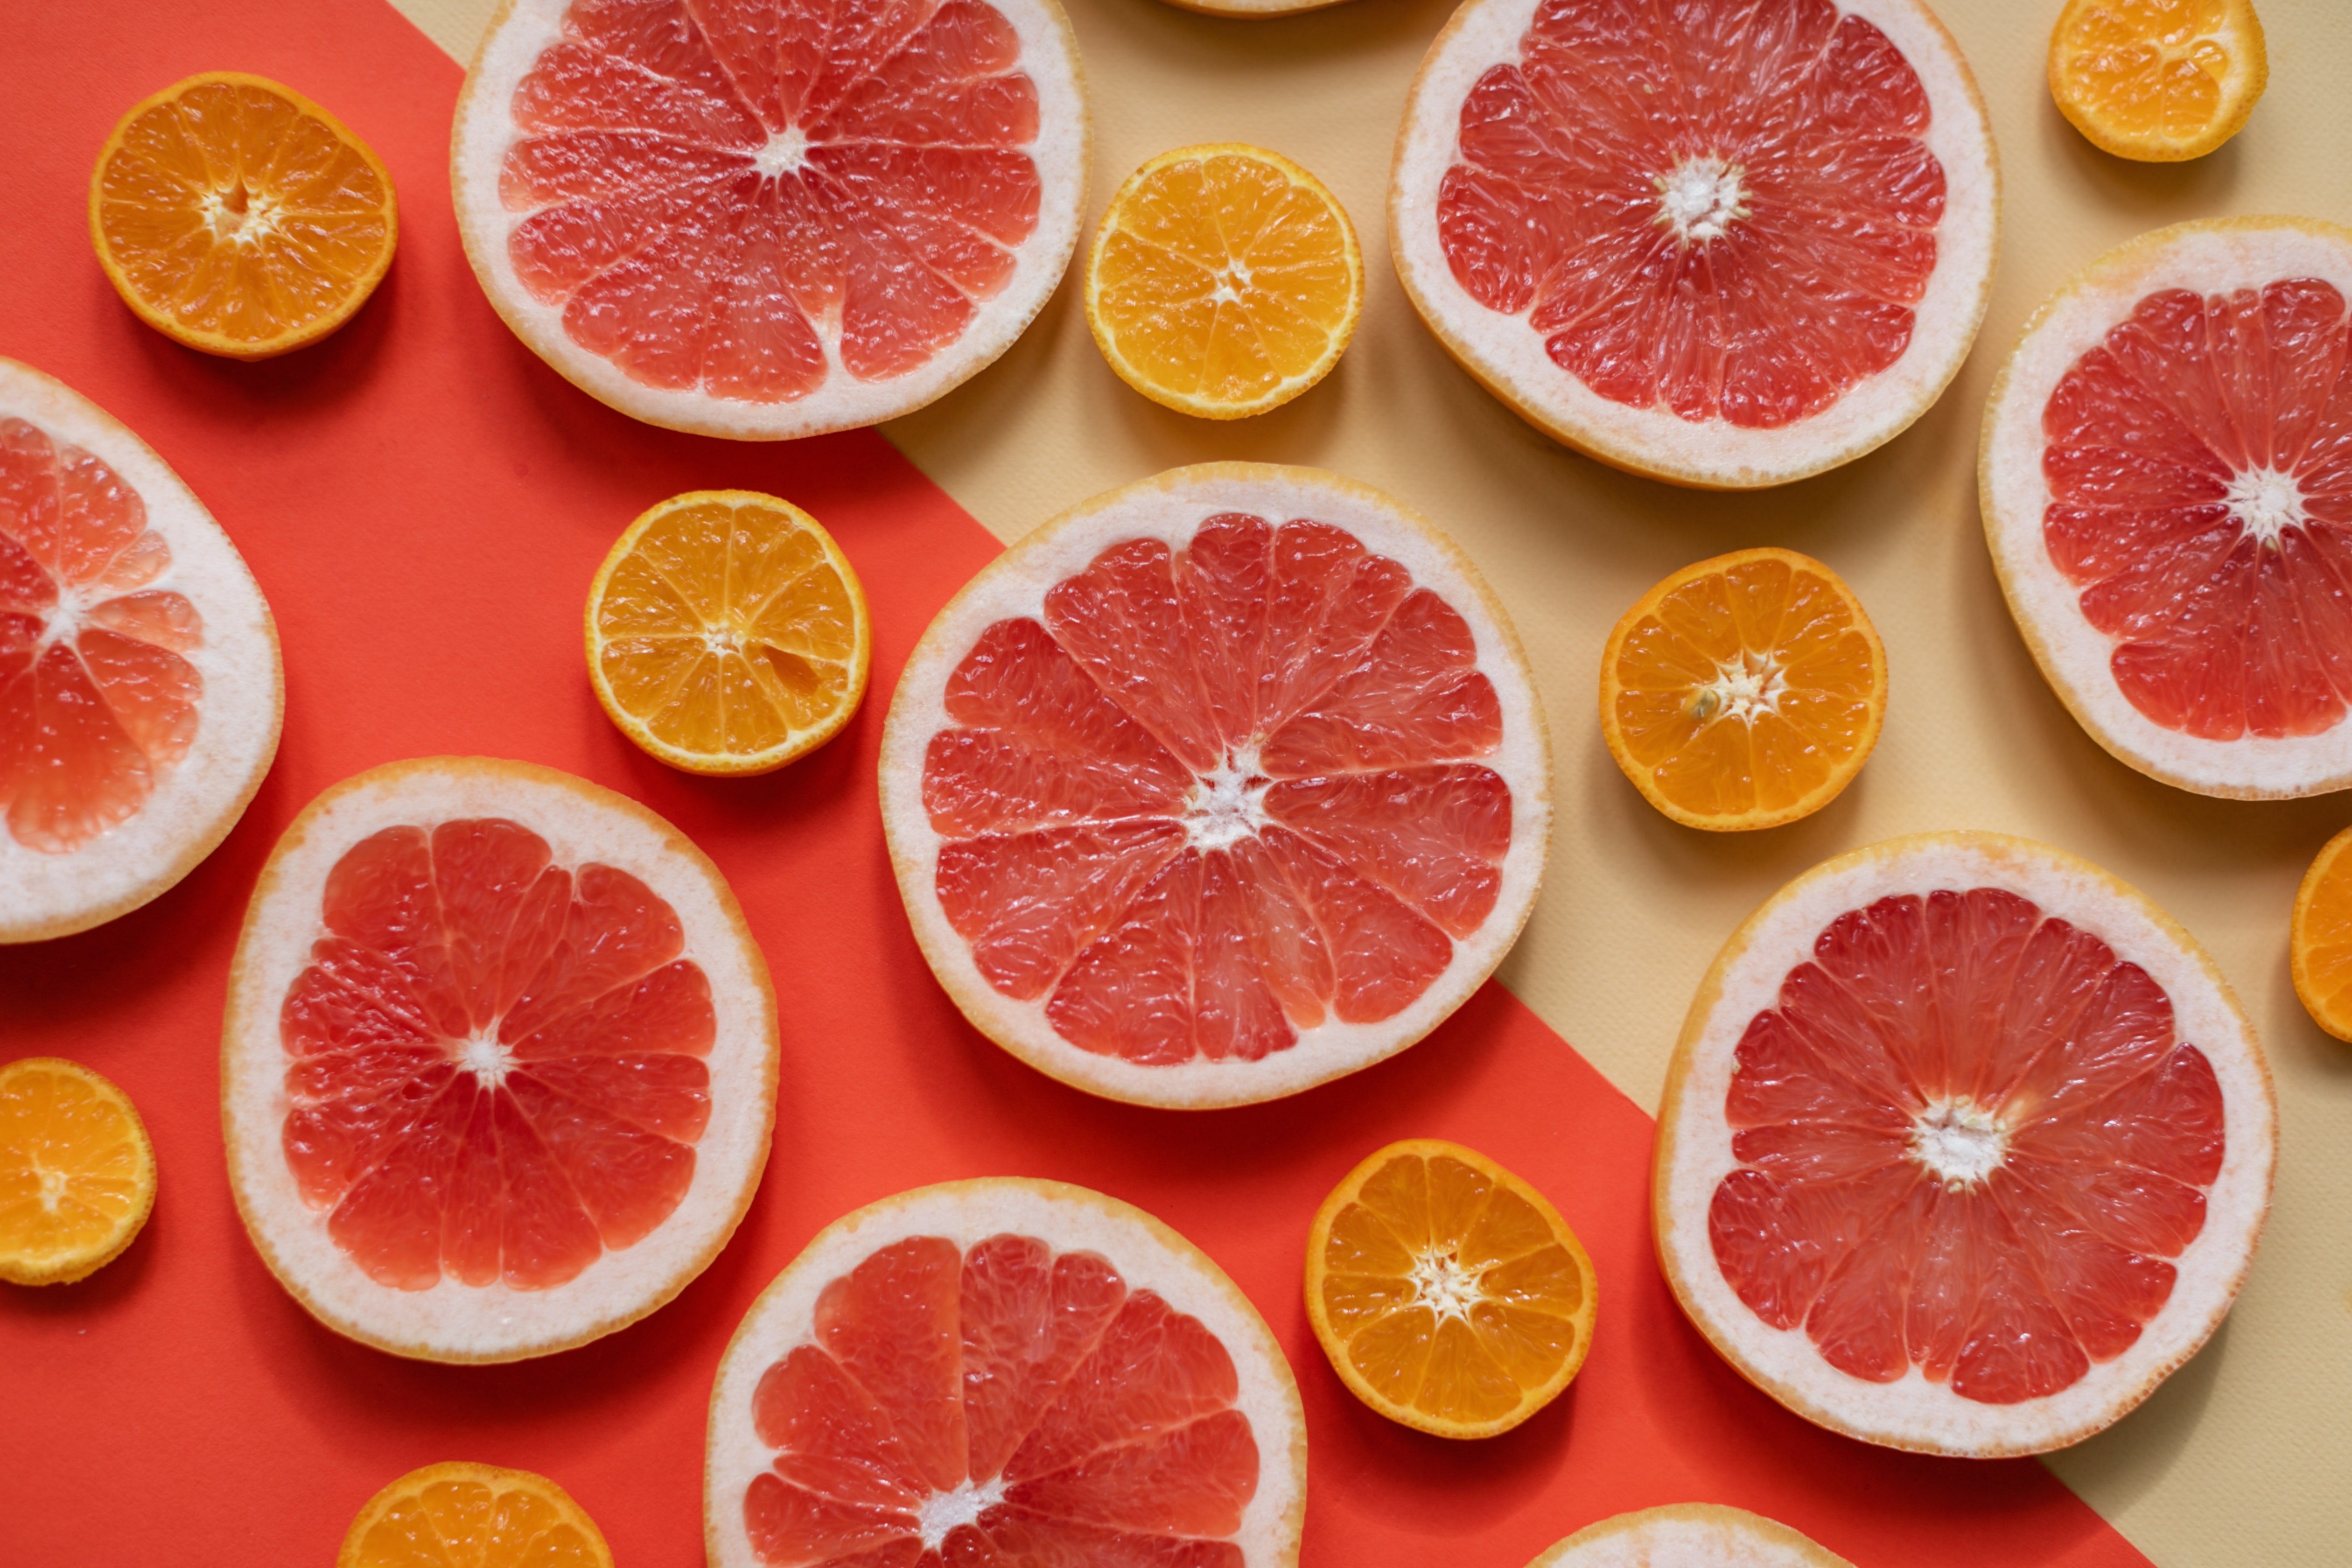 grapefruits and oranges